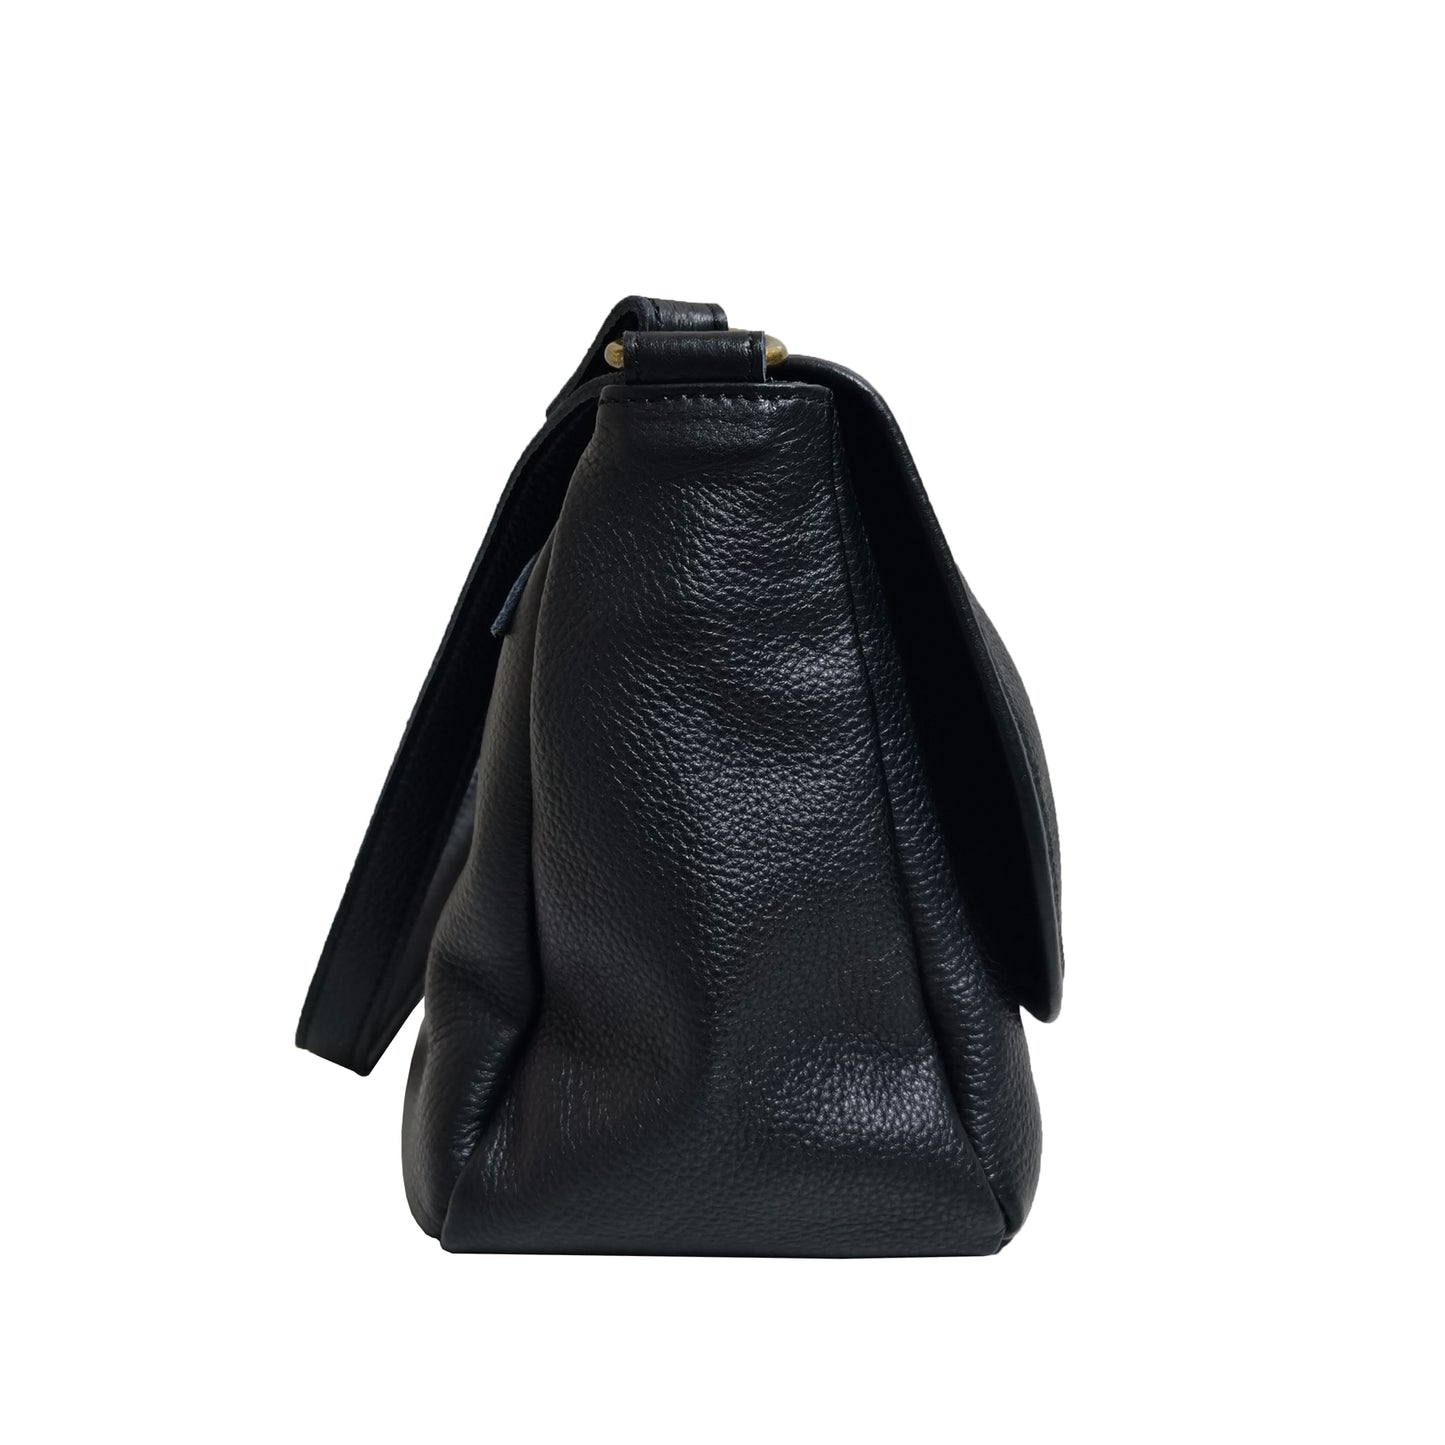 Women's genuine cowhide leather handbag Messenger V2 sling bag